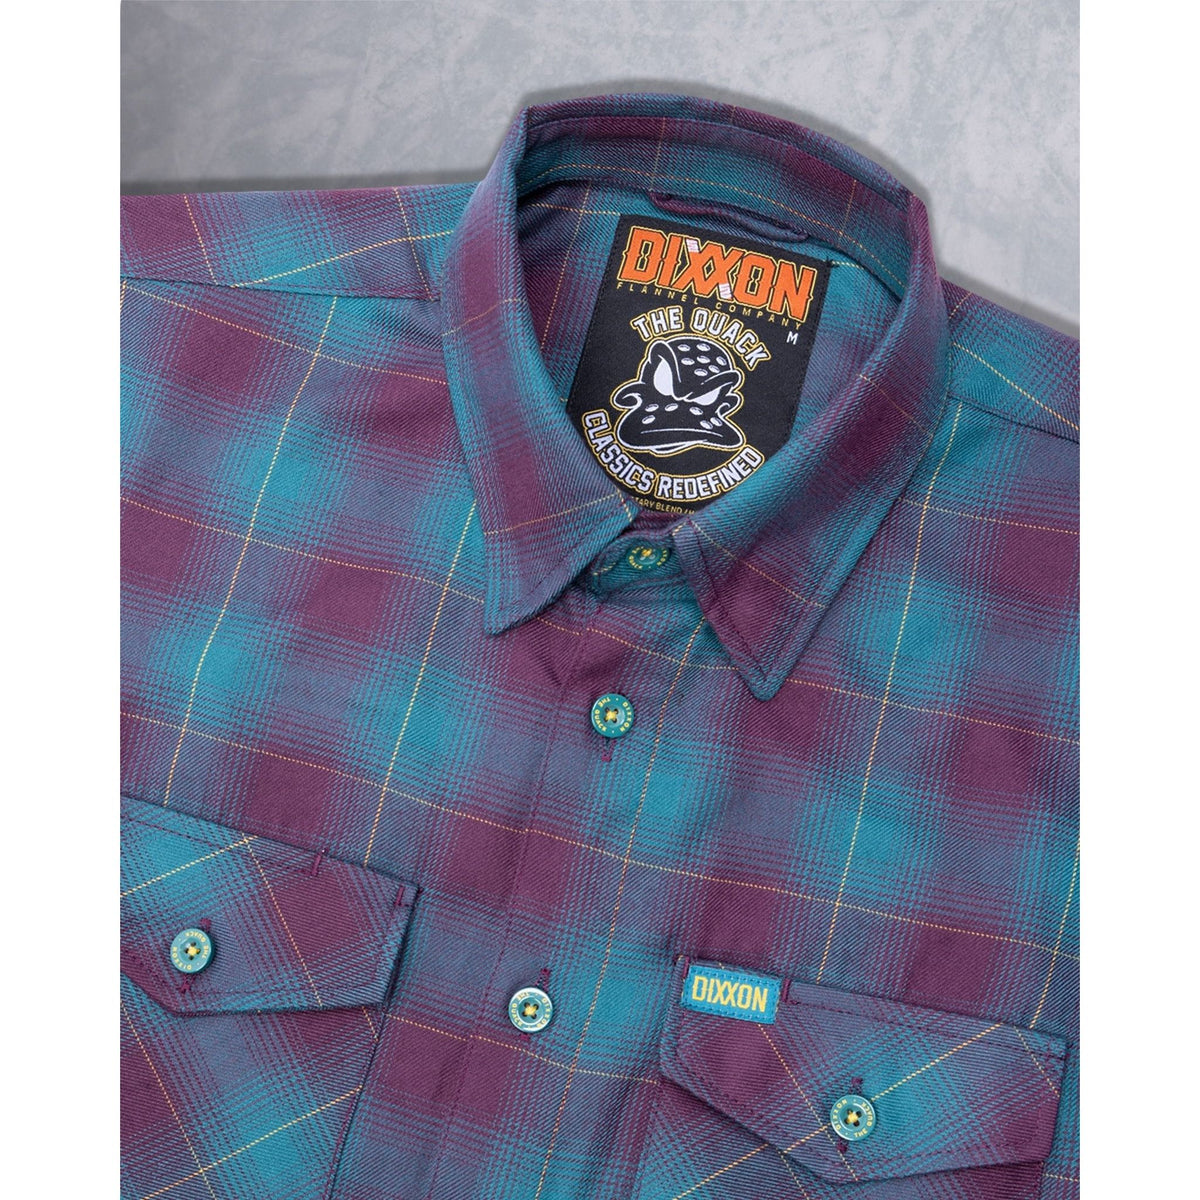 DIXXON-FLANNEL-THE-QUACK-WITH-BAG - FLANNEL - Synik Clothing - synikclothing.com